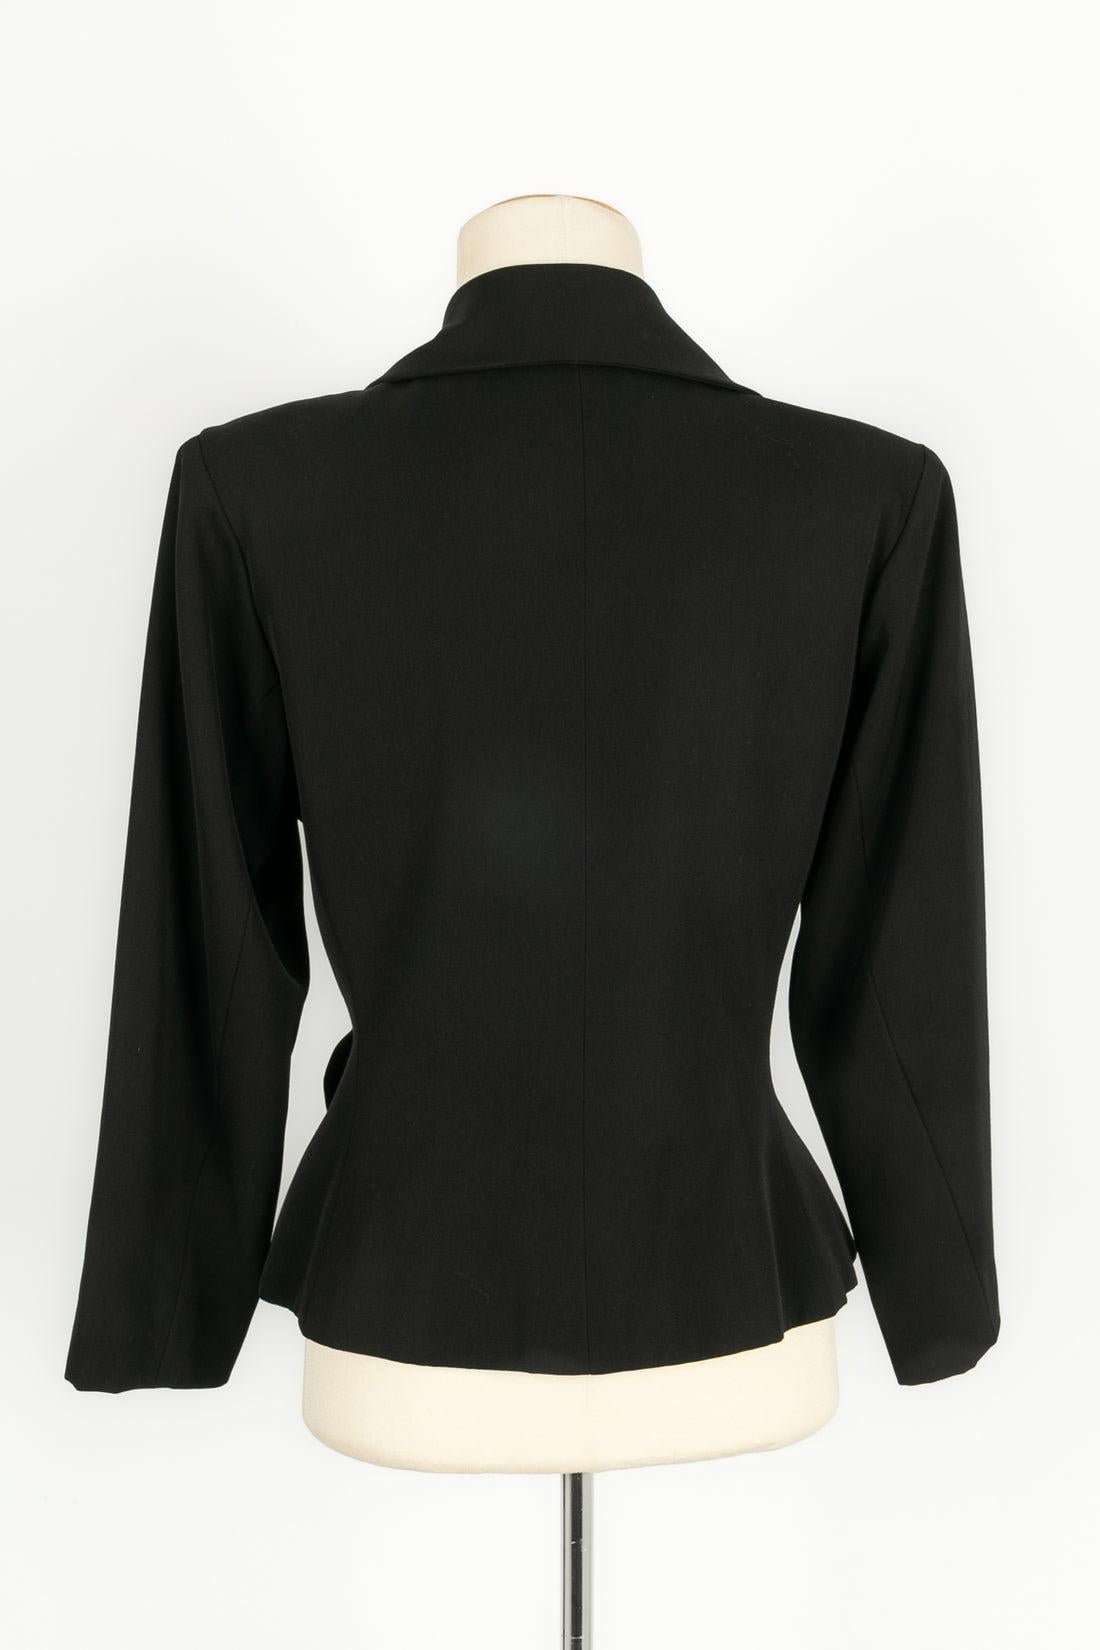 Yves Saint Laurent Black Skirt Suit For Sale 2